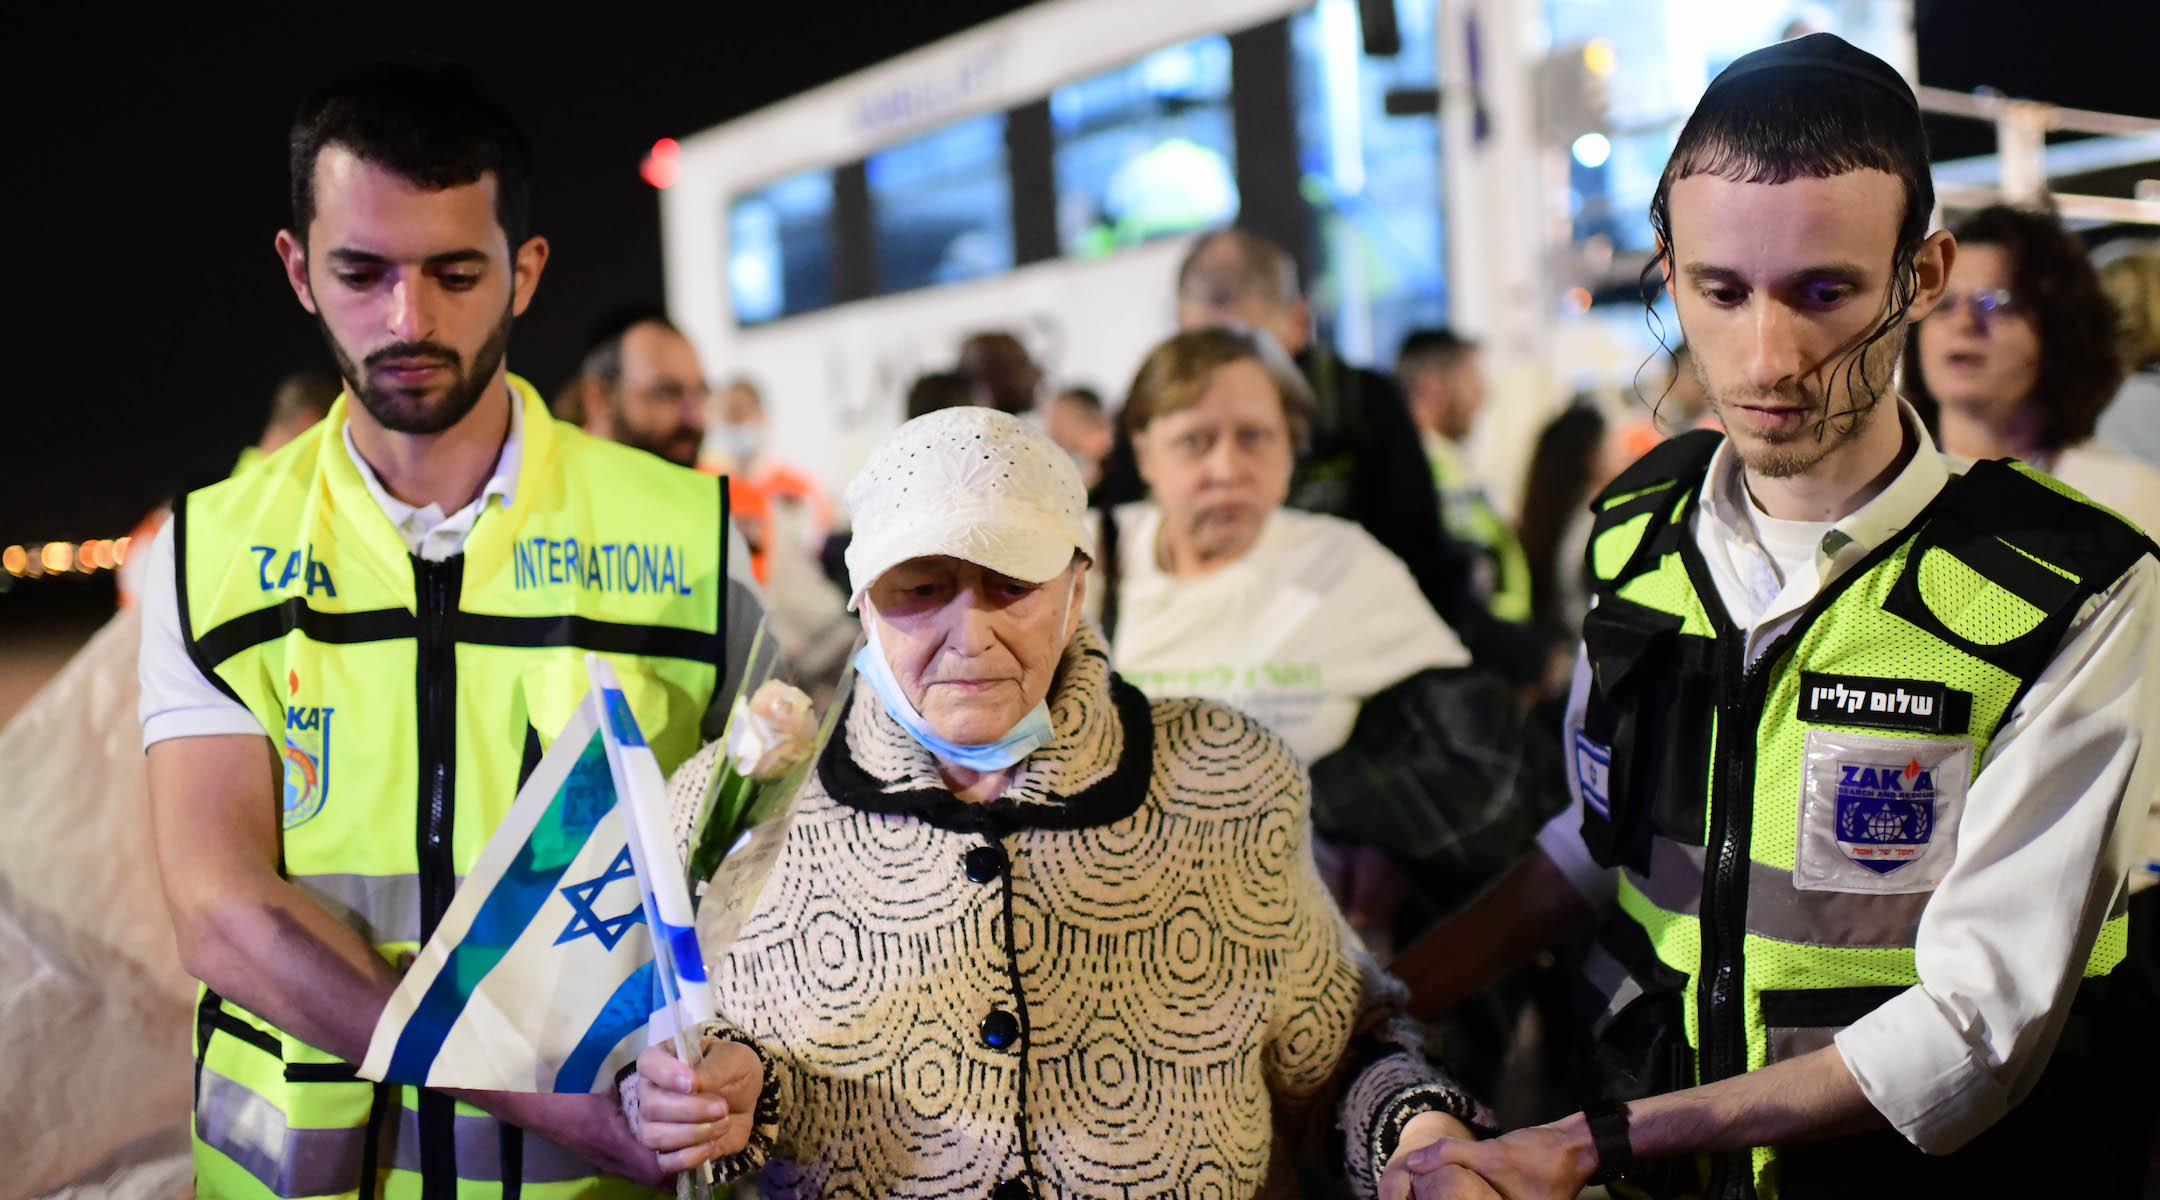 Holocaust survivors rescued from the war in Ukraine arrive at Ben Gurion airport near Tel Aviv, April 27, 2022. (Tomer Neuberg/Flash90)